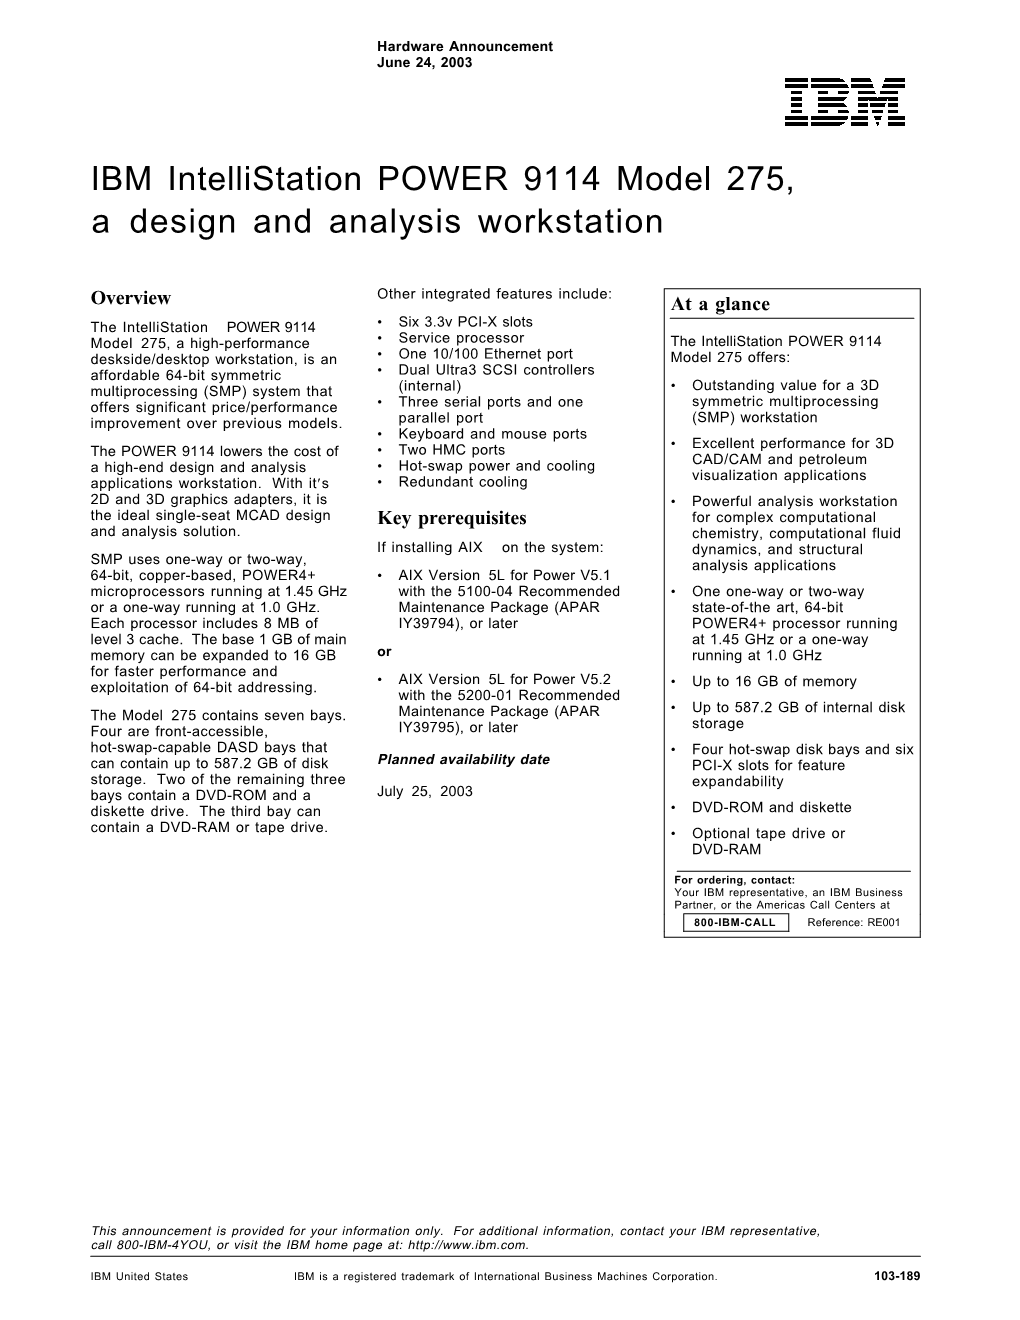 IBM Intellistation POWER 9114 Model 275, a Design and Analysis Workstation